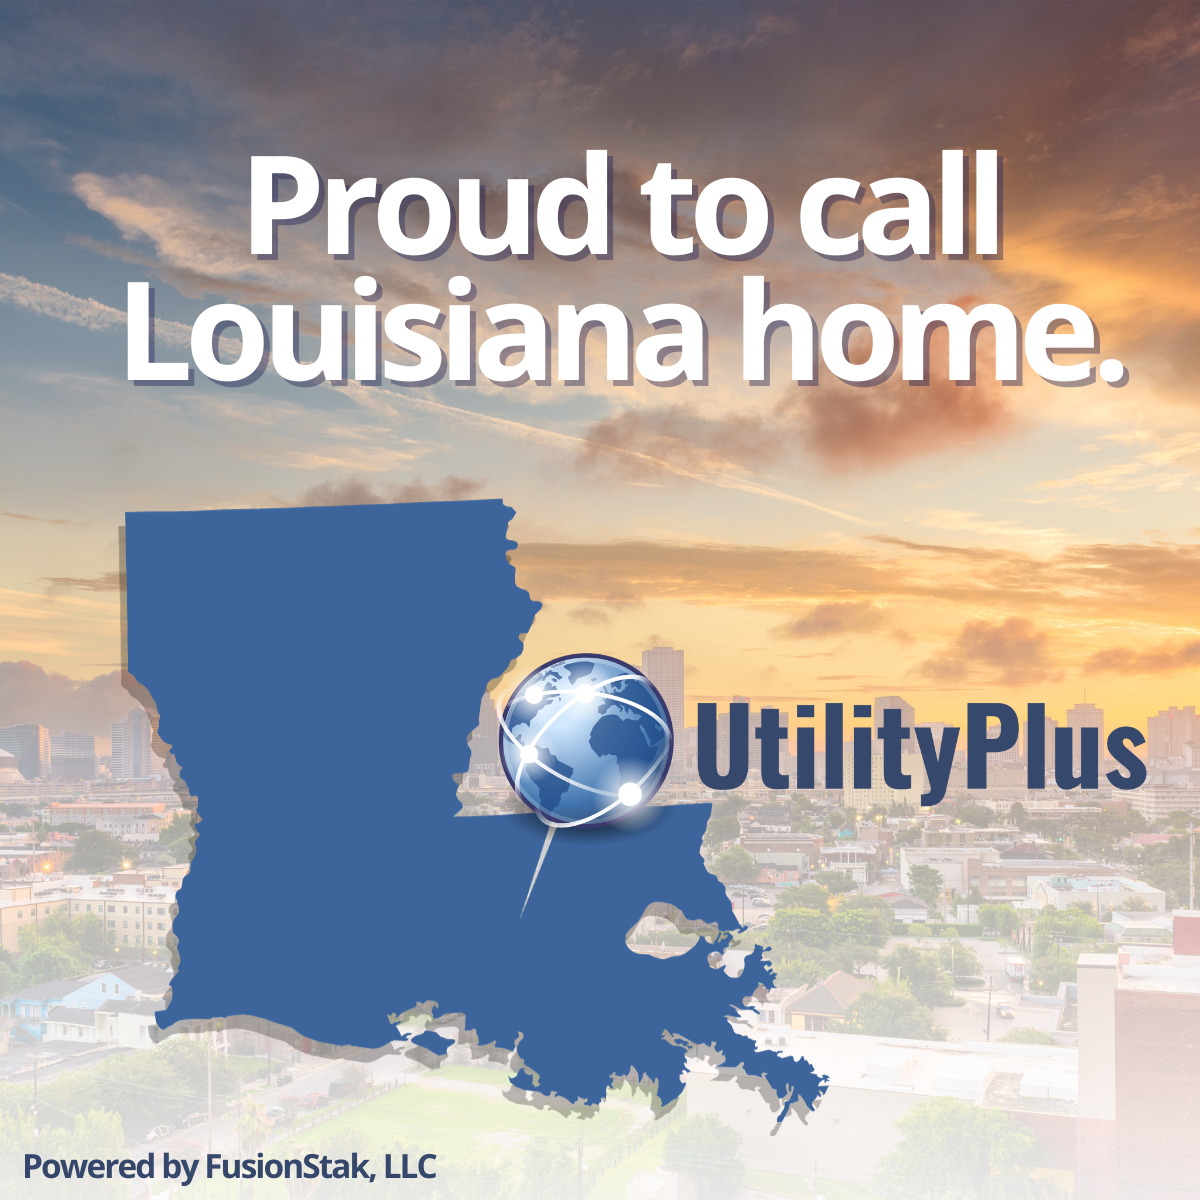 UtilityPlus Louisiana Based